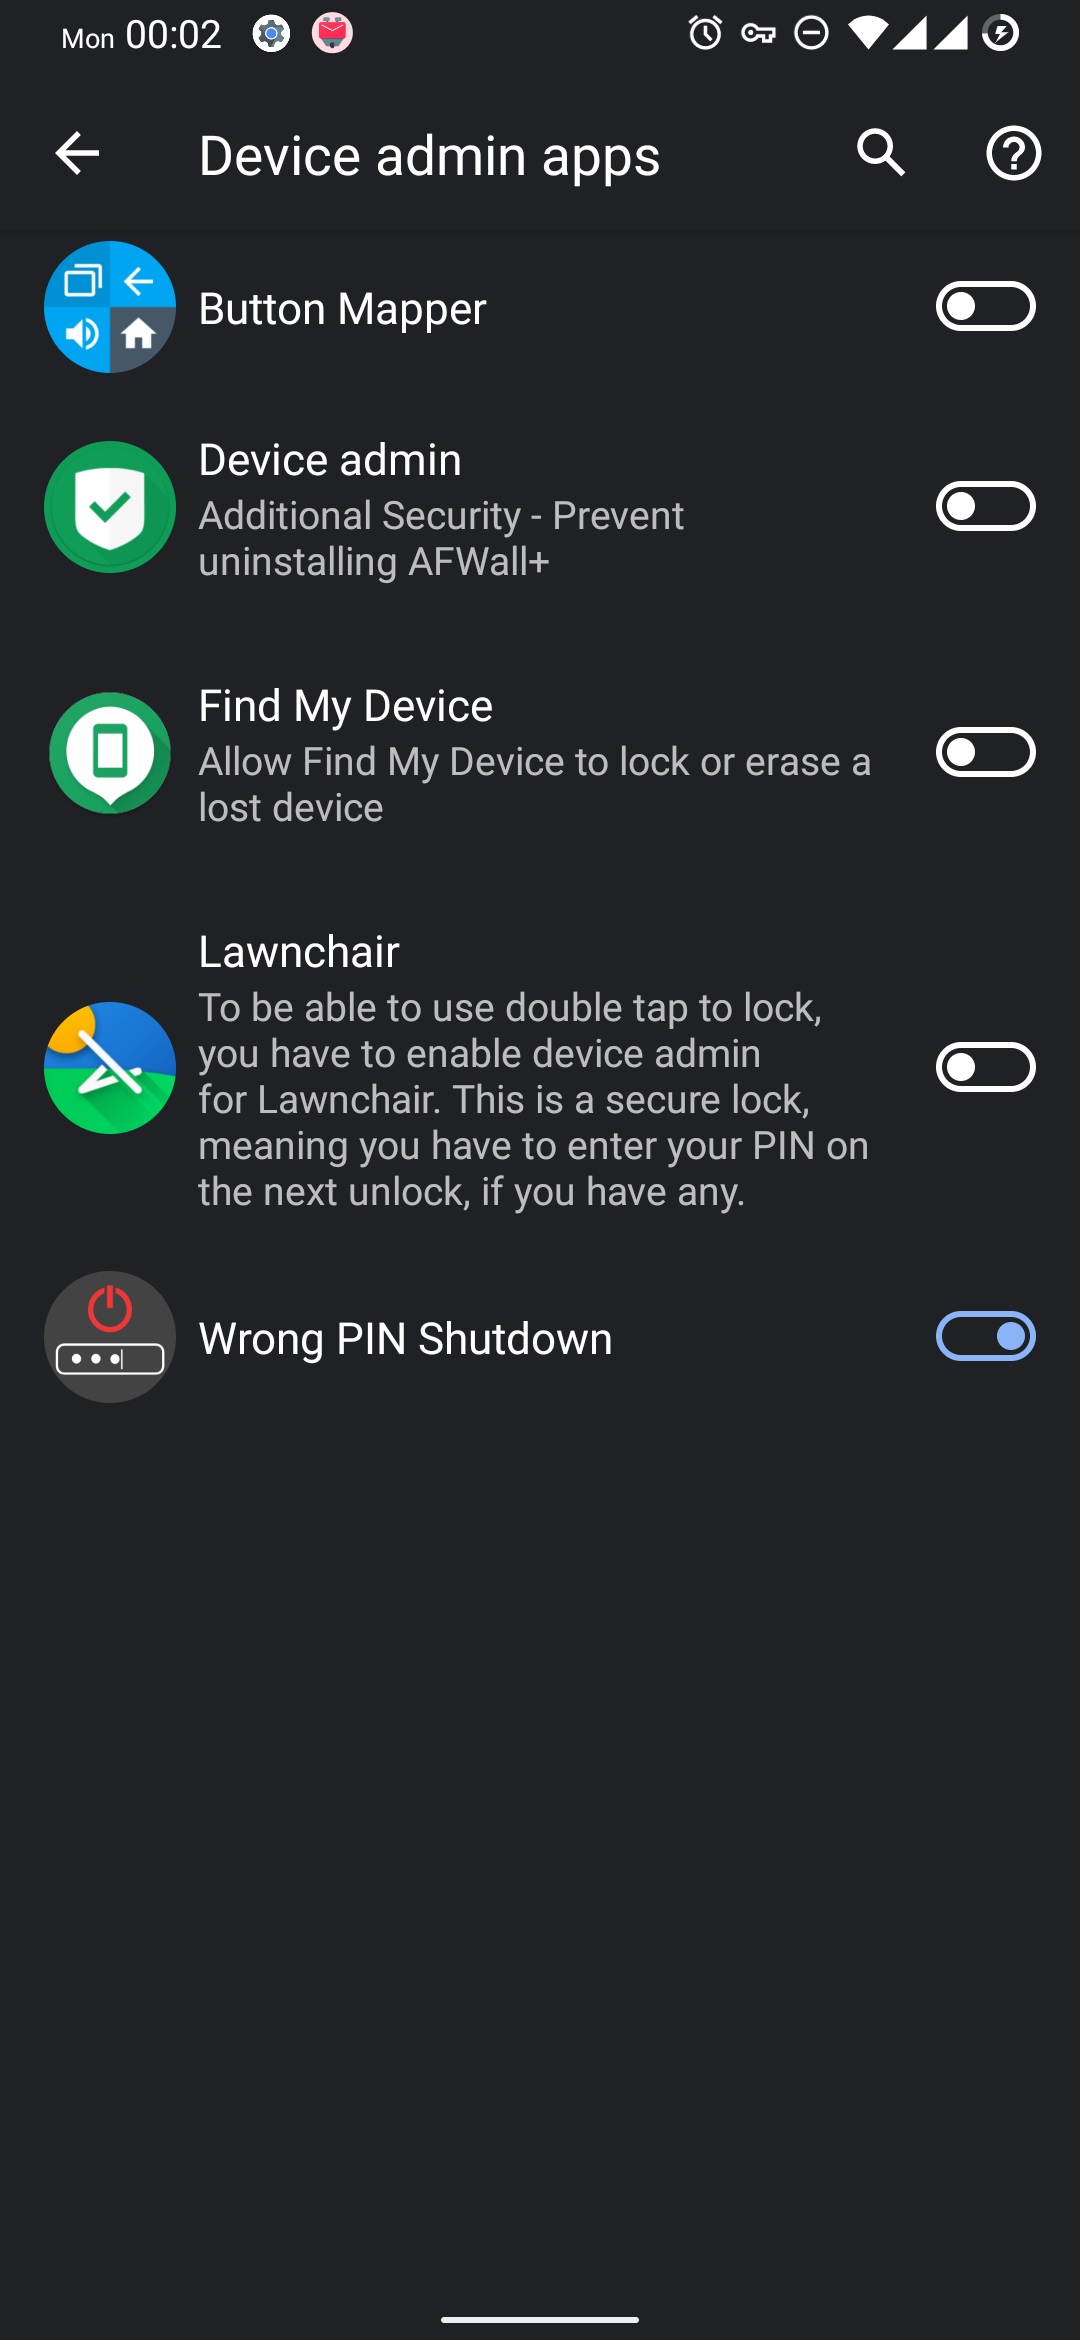 android-lockdown-mode-wrong-pin-shutdown-device-admin